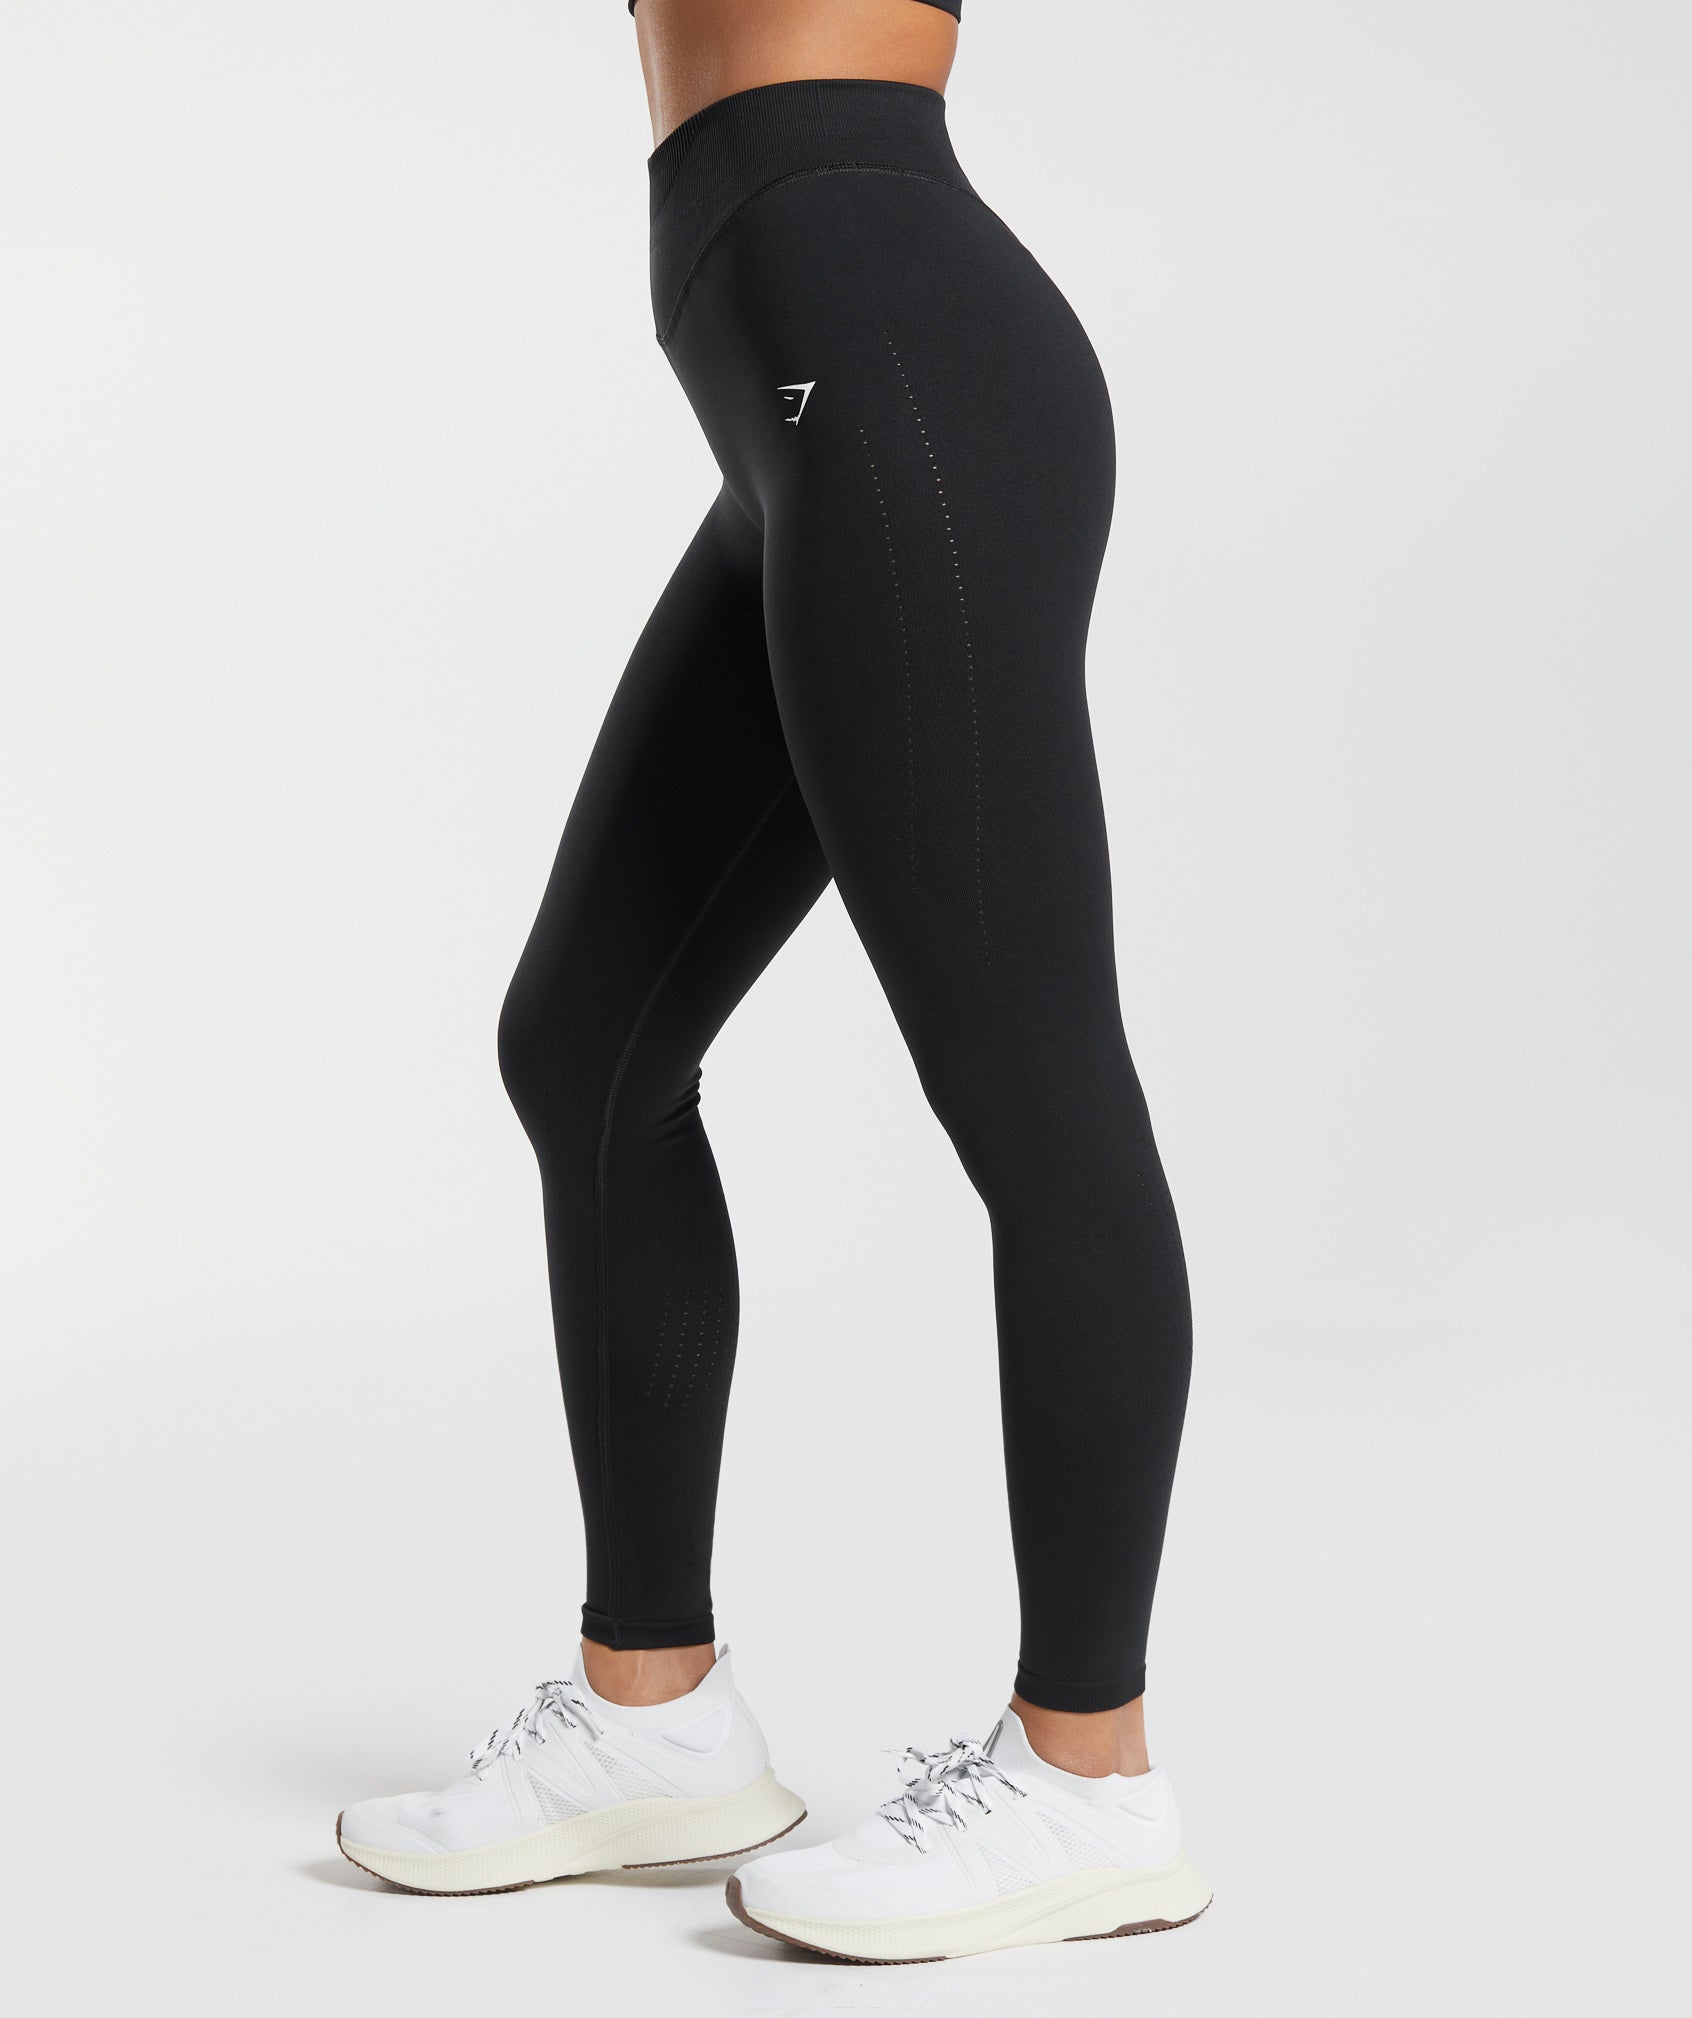 NWT Gymshark FIT SEAMLESS LEGGINGS  Seamless leggings, Clothes design,  Fashion tips